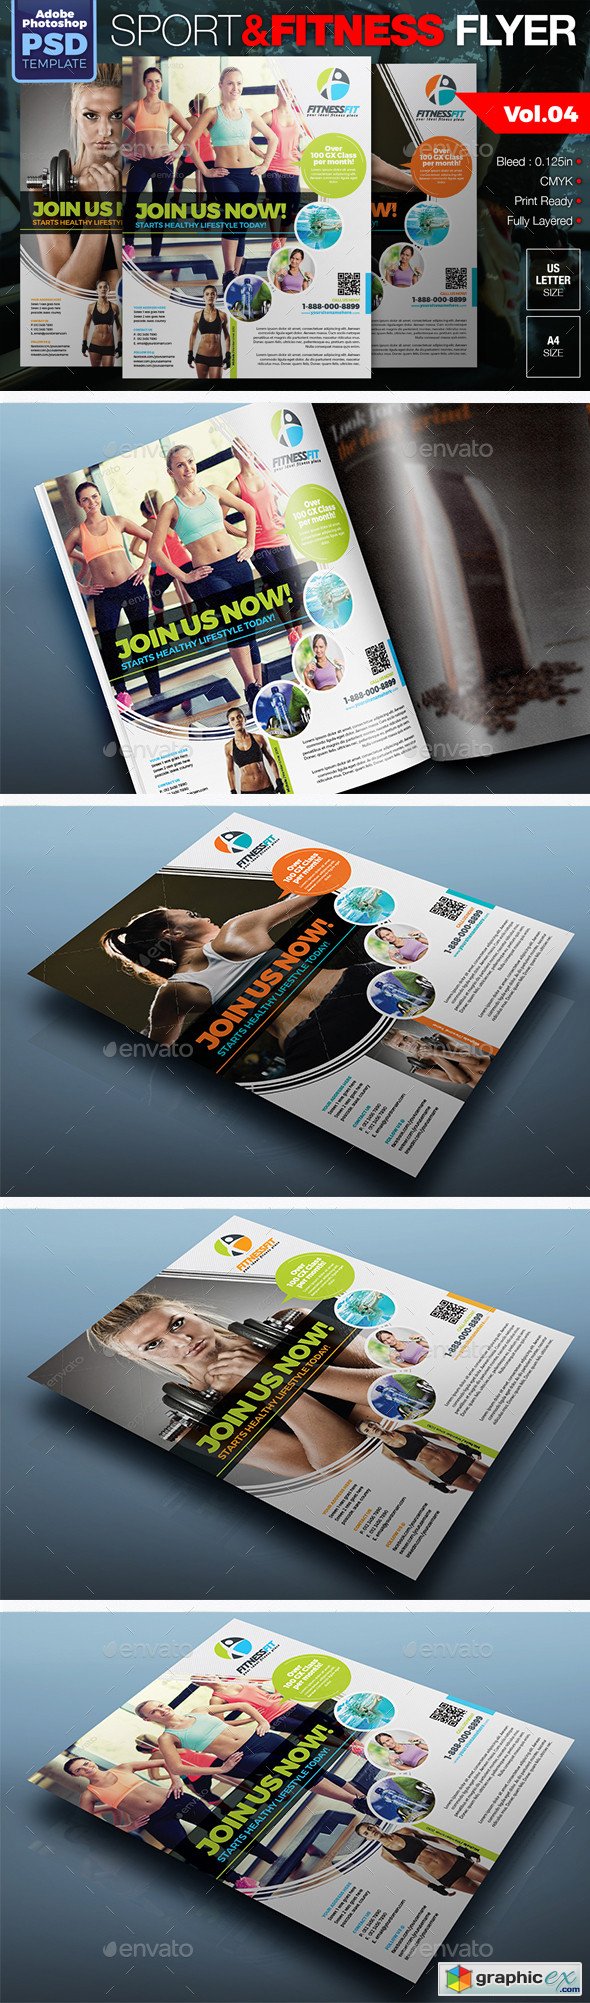 Graphicriver Sport & Fitness Flyer Vol.04